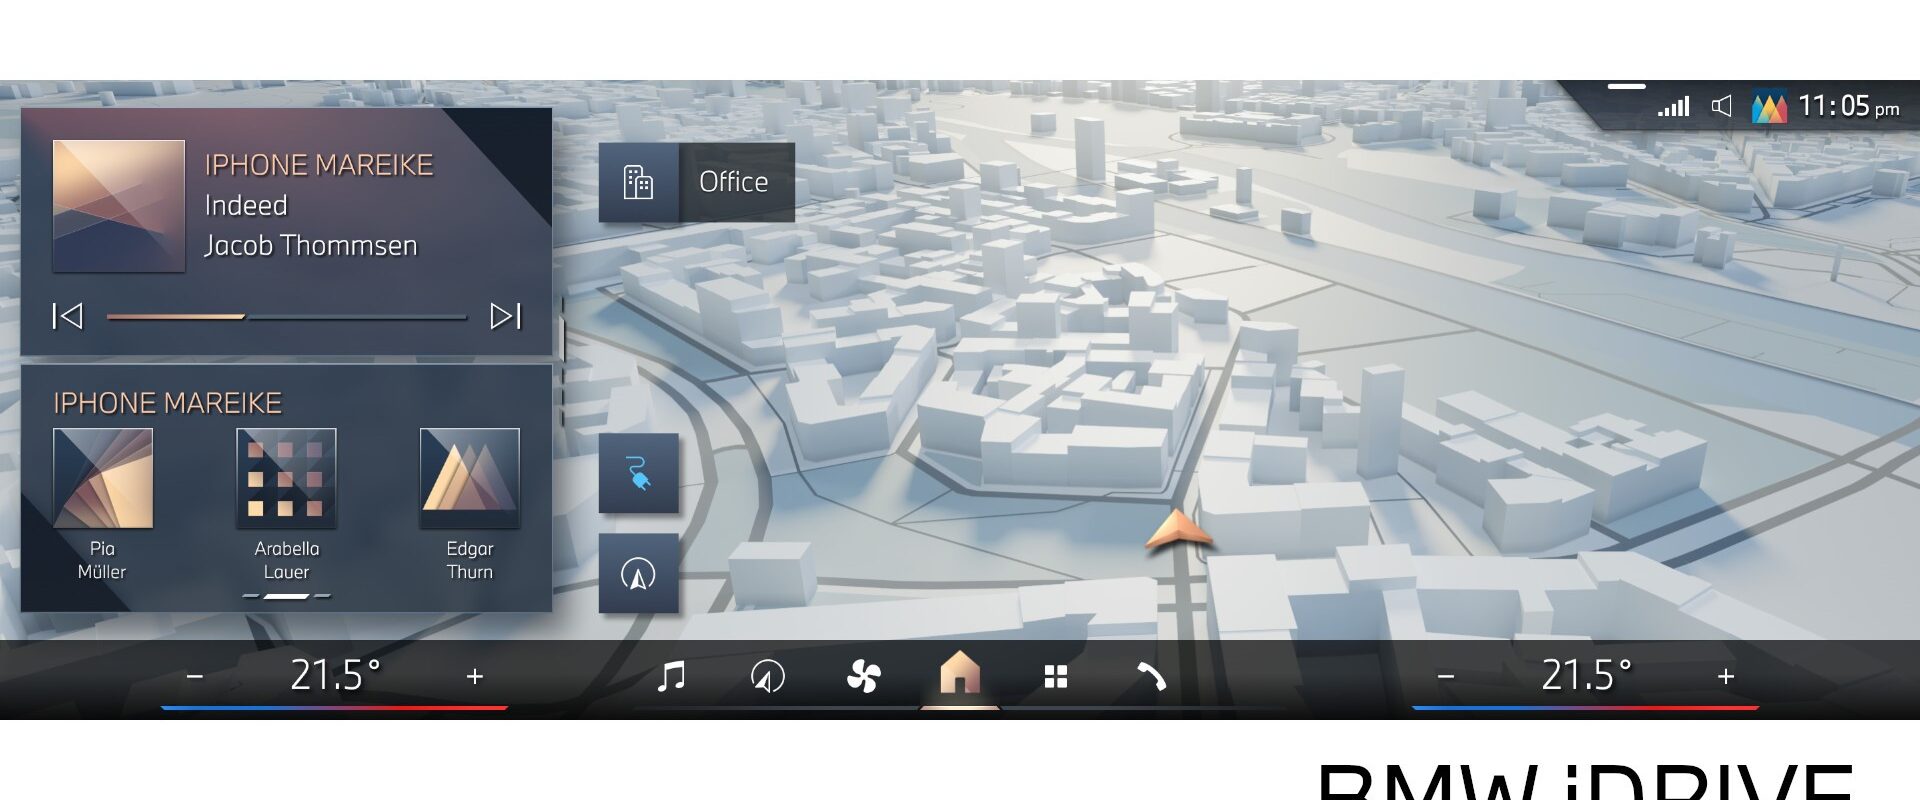 BMW USA Showcases New iDrive Virtual System